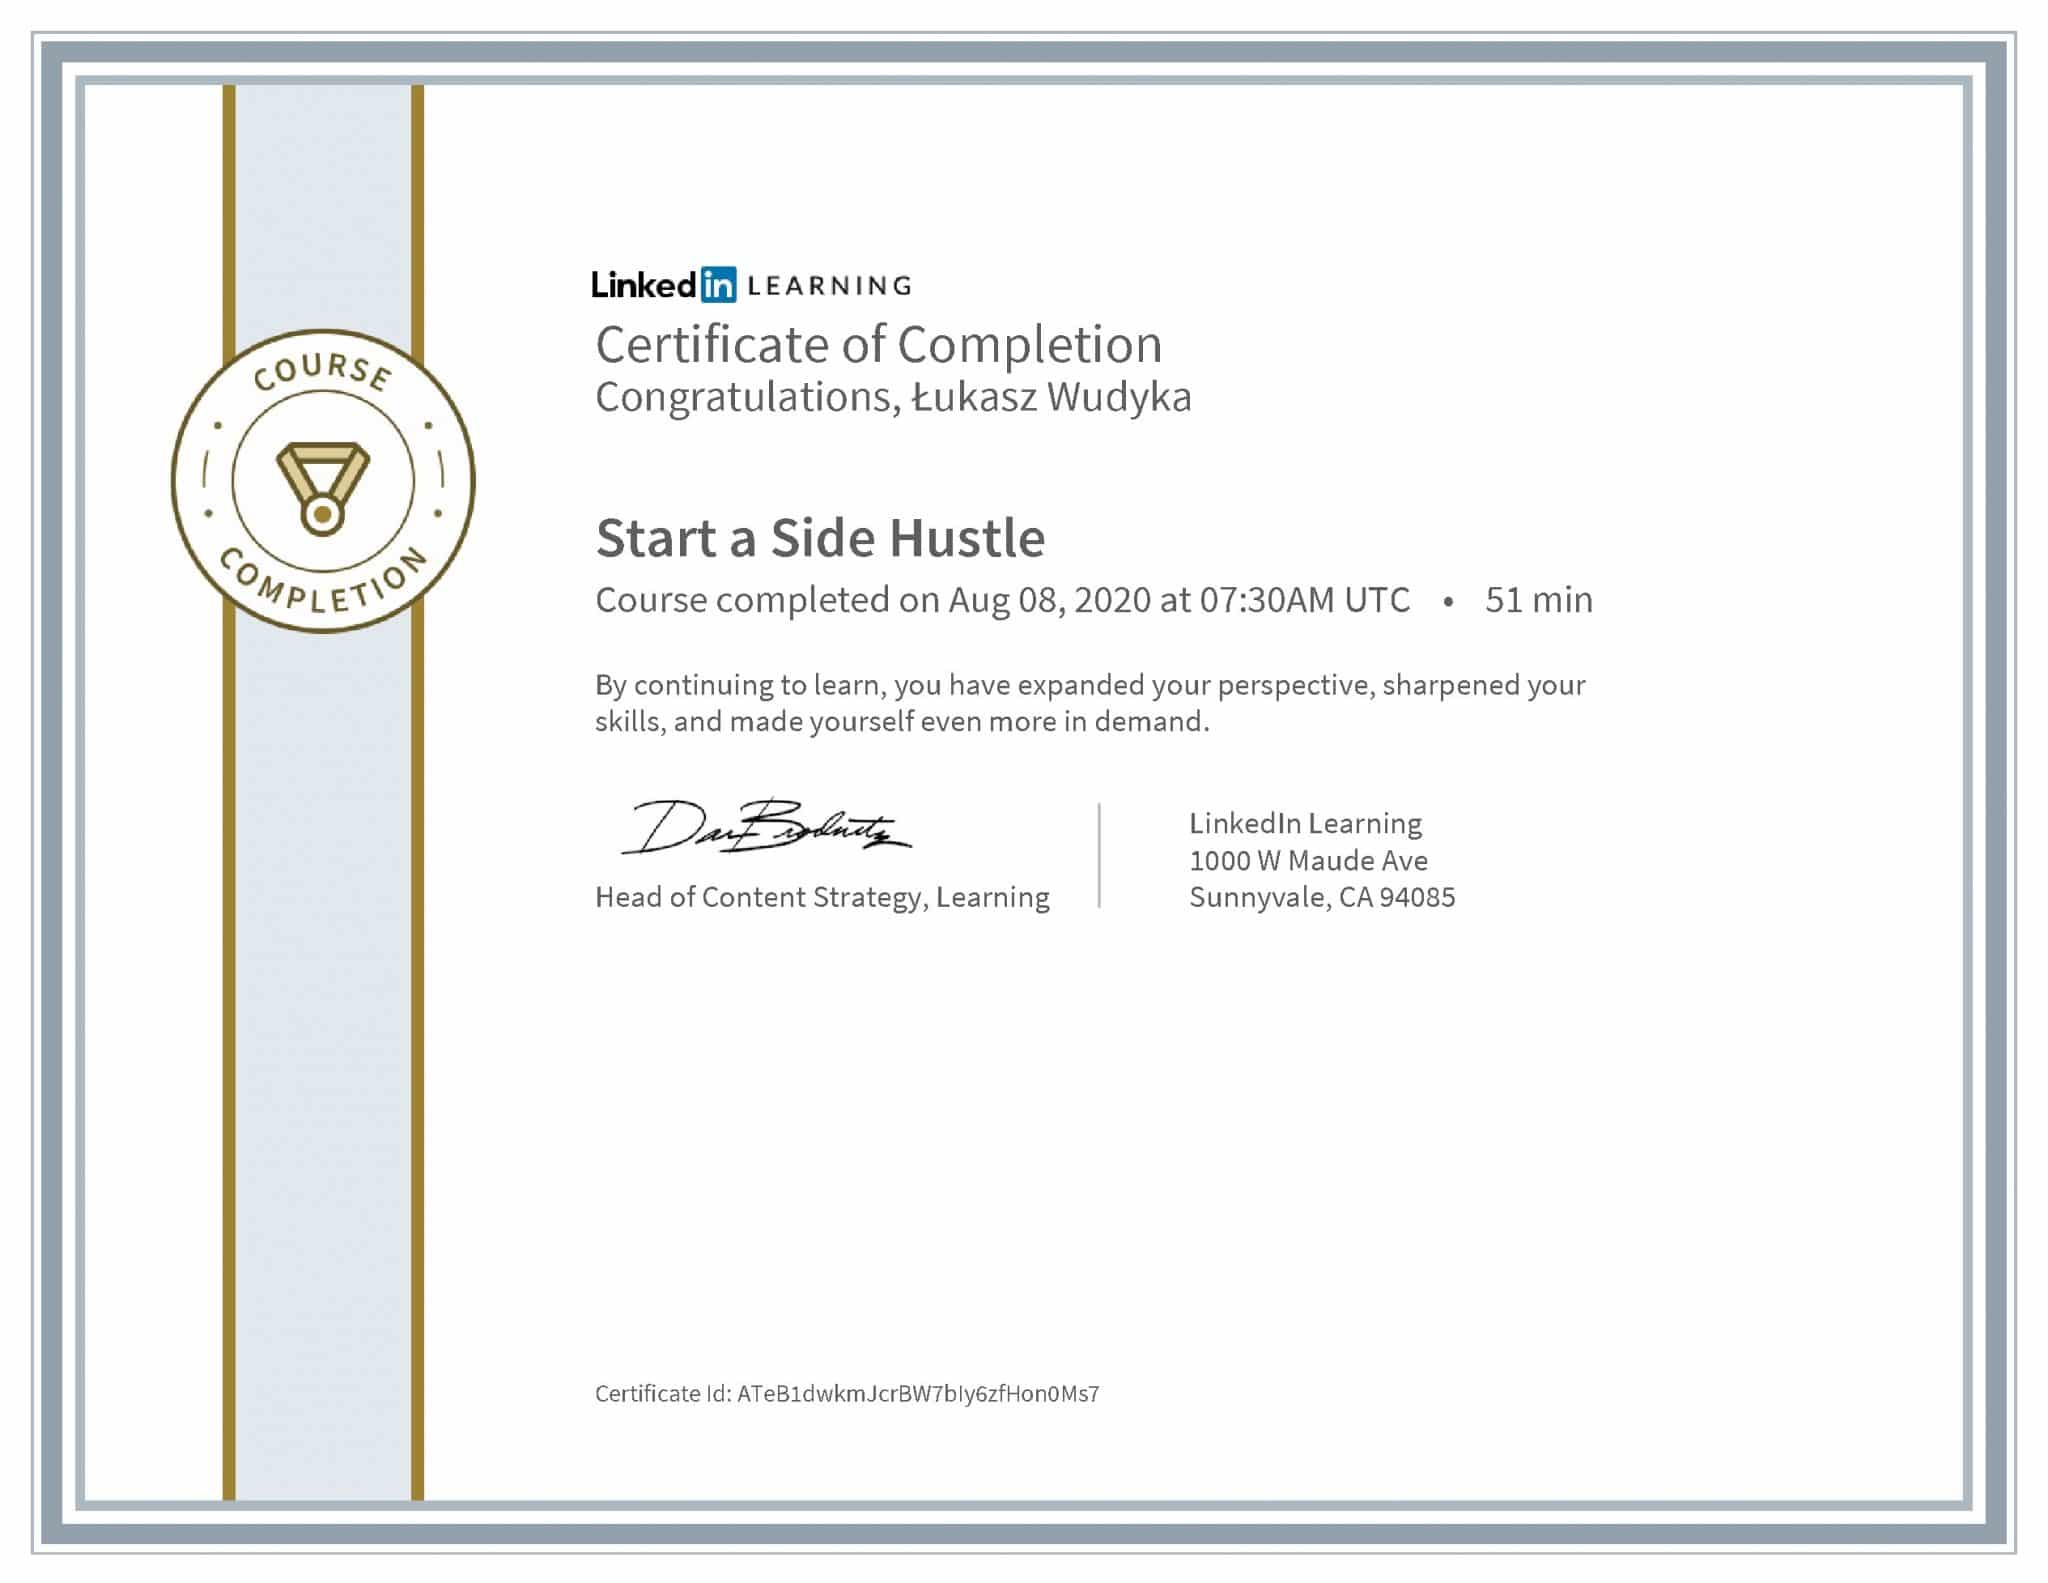 Łukasz Wudyka certyfikat LinkedIn Start a Side Hustle